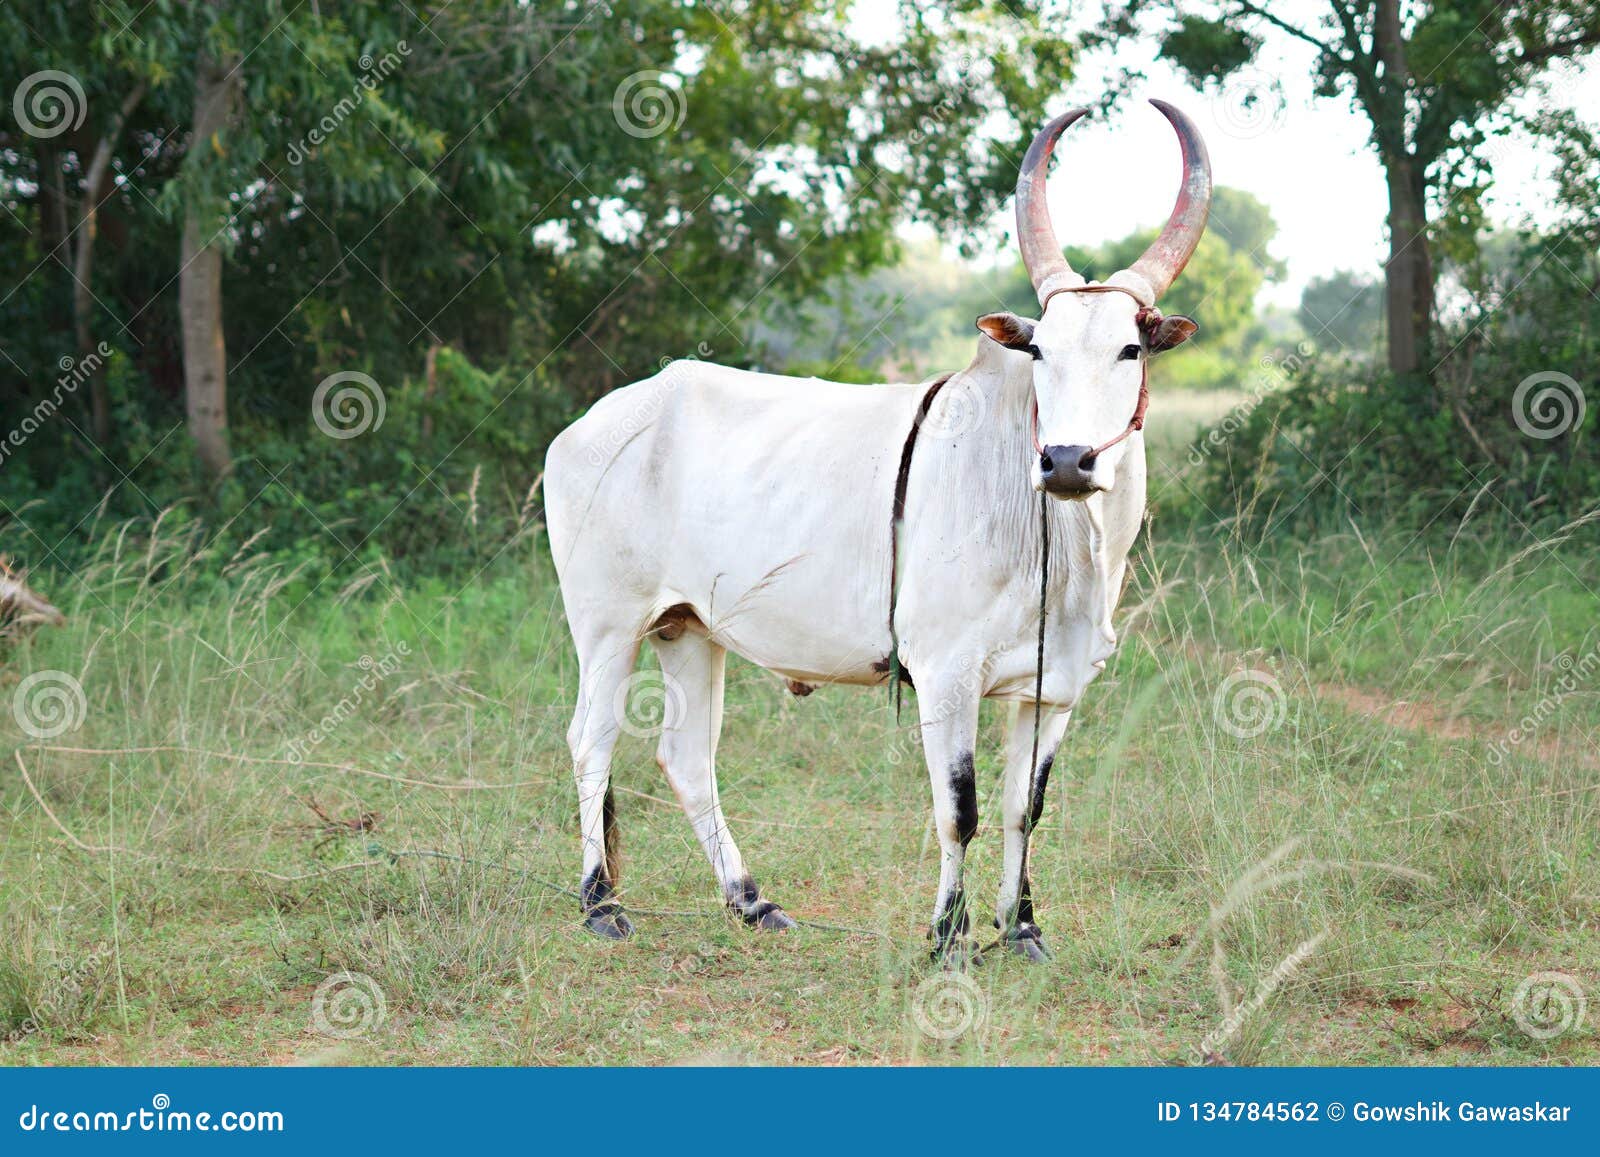 Kangayam Bull Stock Photos - Free & Royalty-Free Stock Photos from  Dreamstime